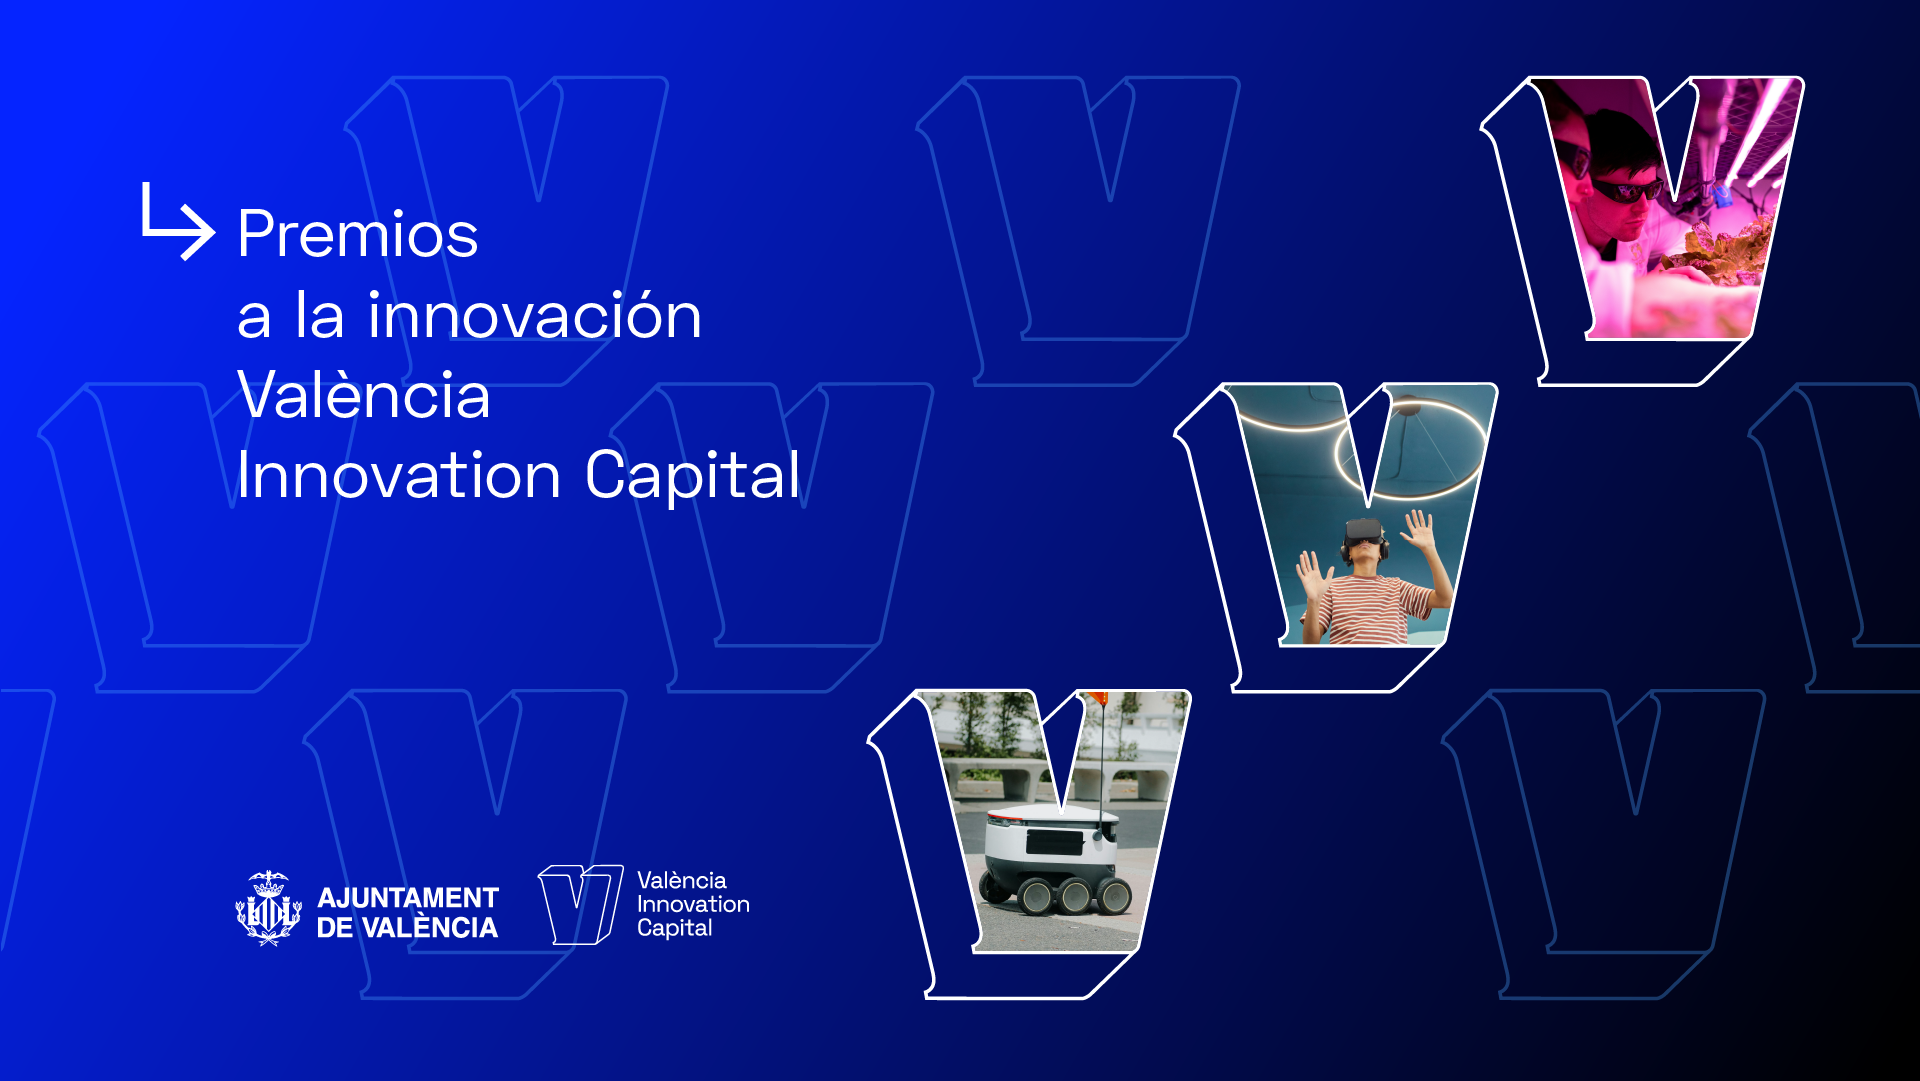 València Innovation Capital